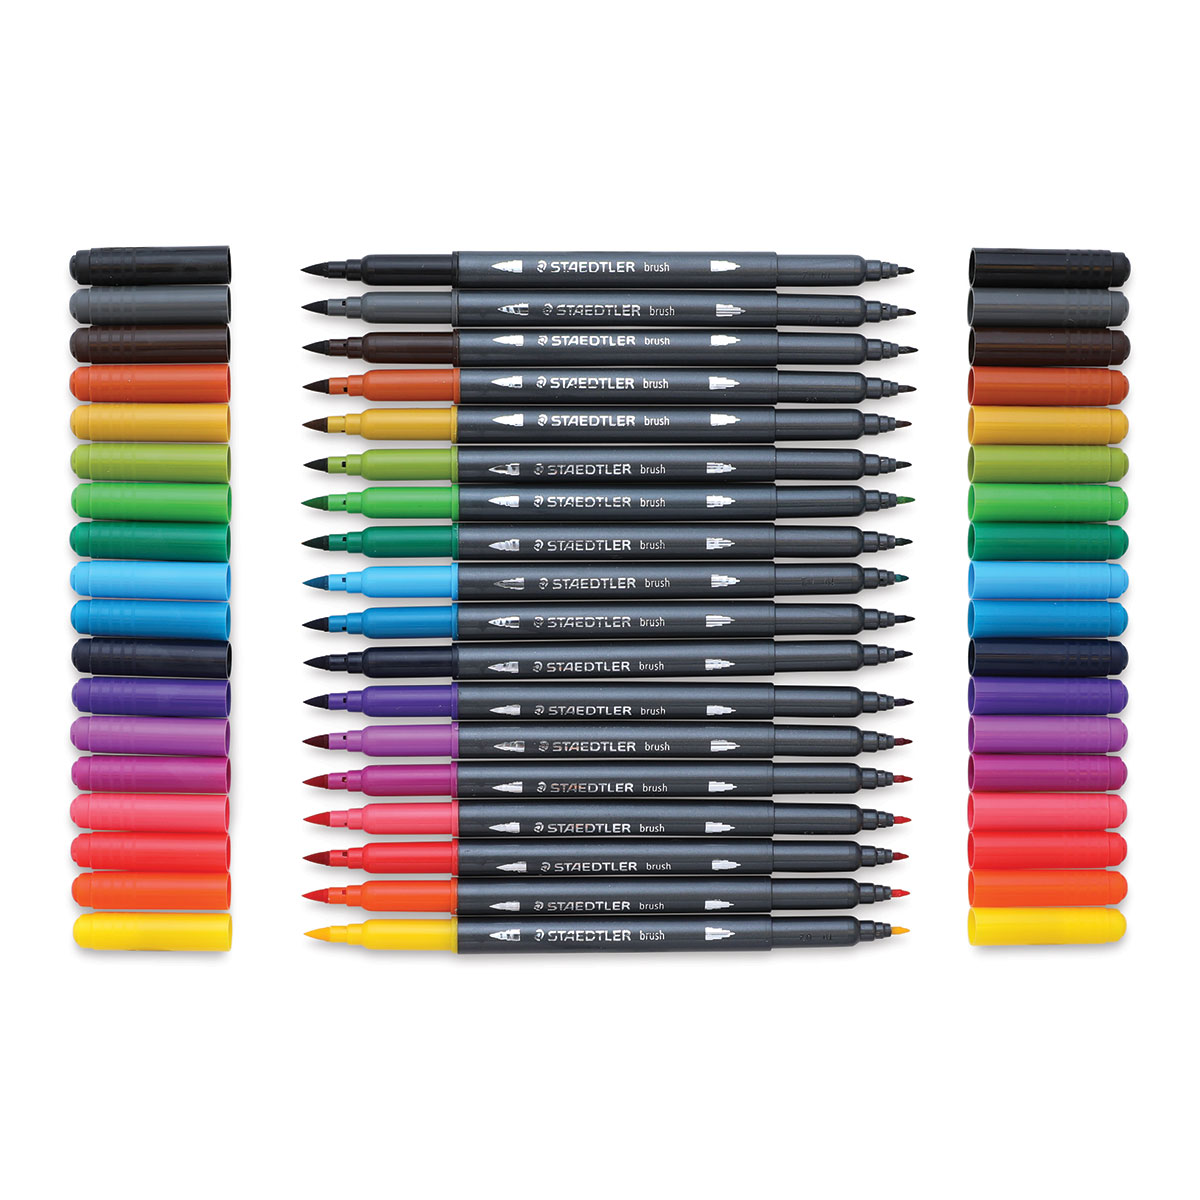 Staedtler Double-Ended Permanent Pens - 18 Piece Set